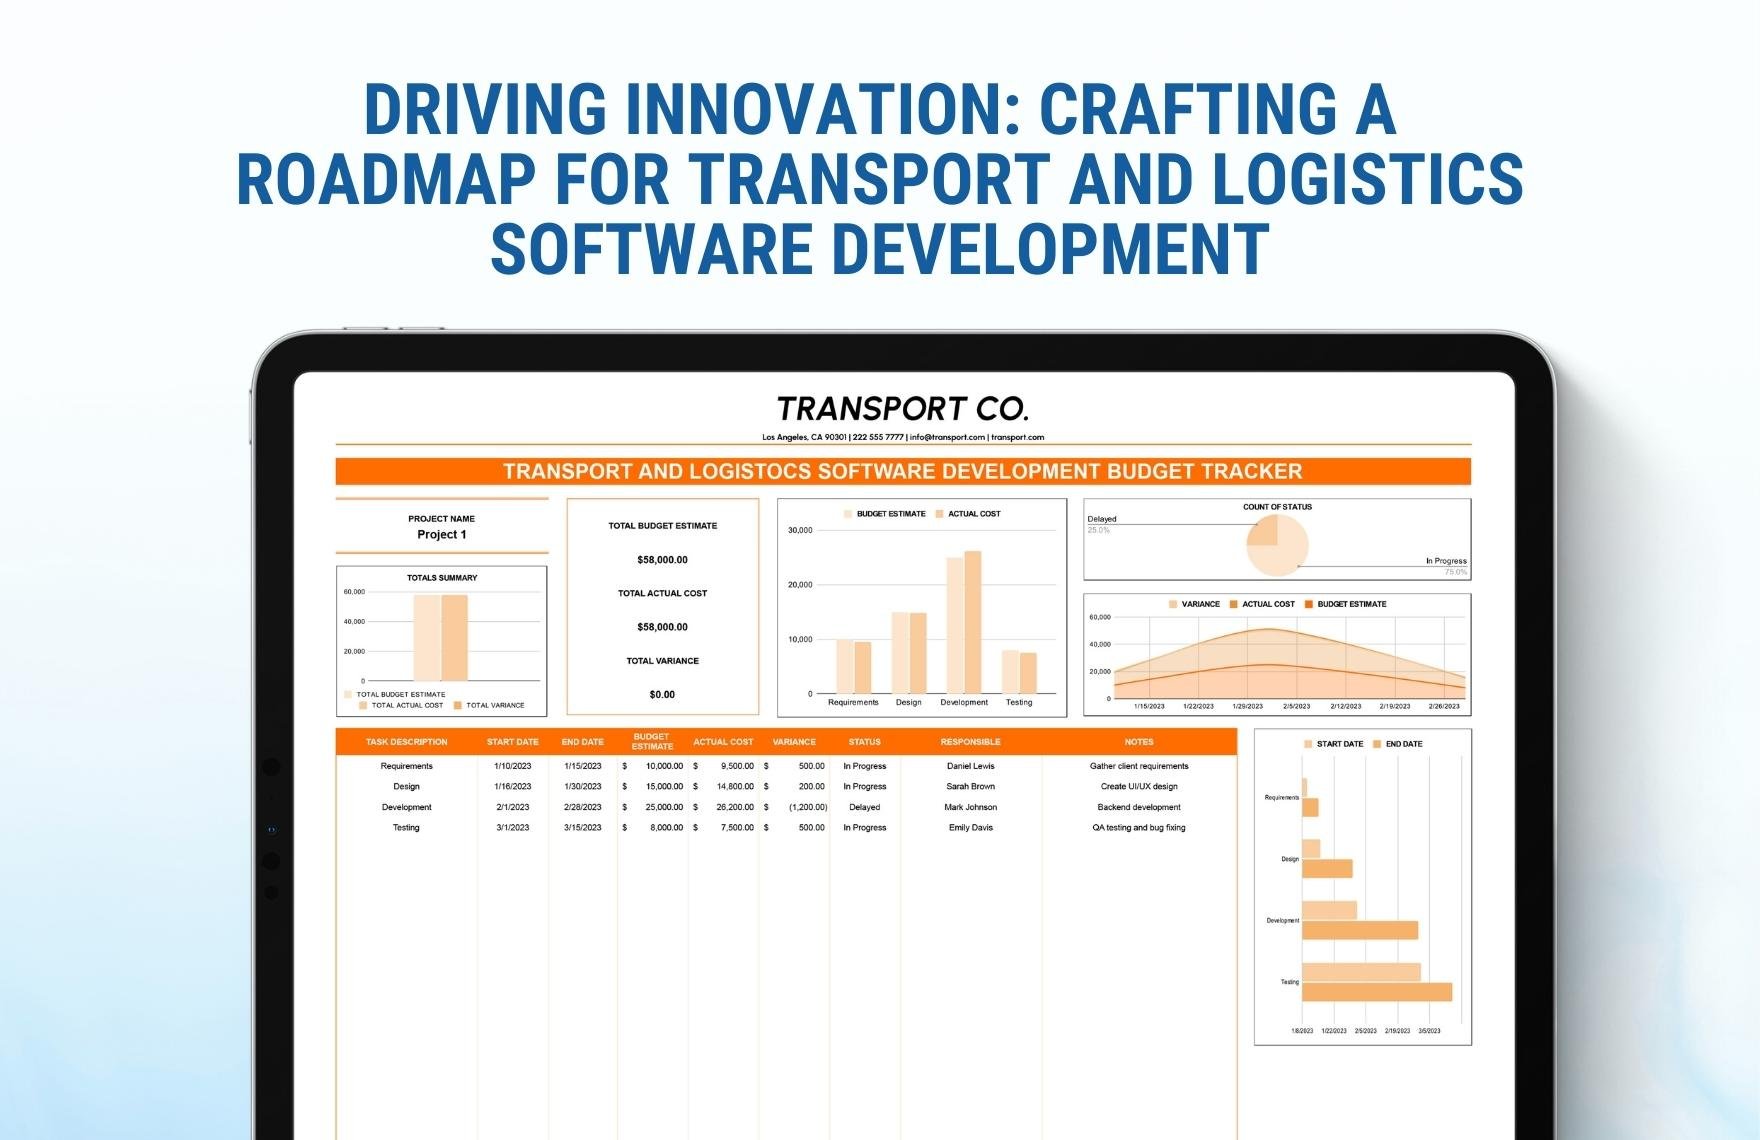 Transport and Logistics Software Development Budget Tracker Template